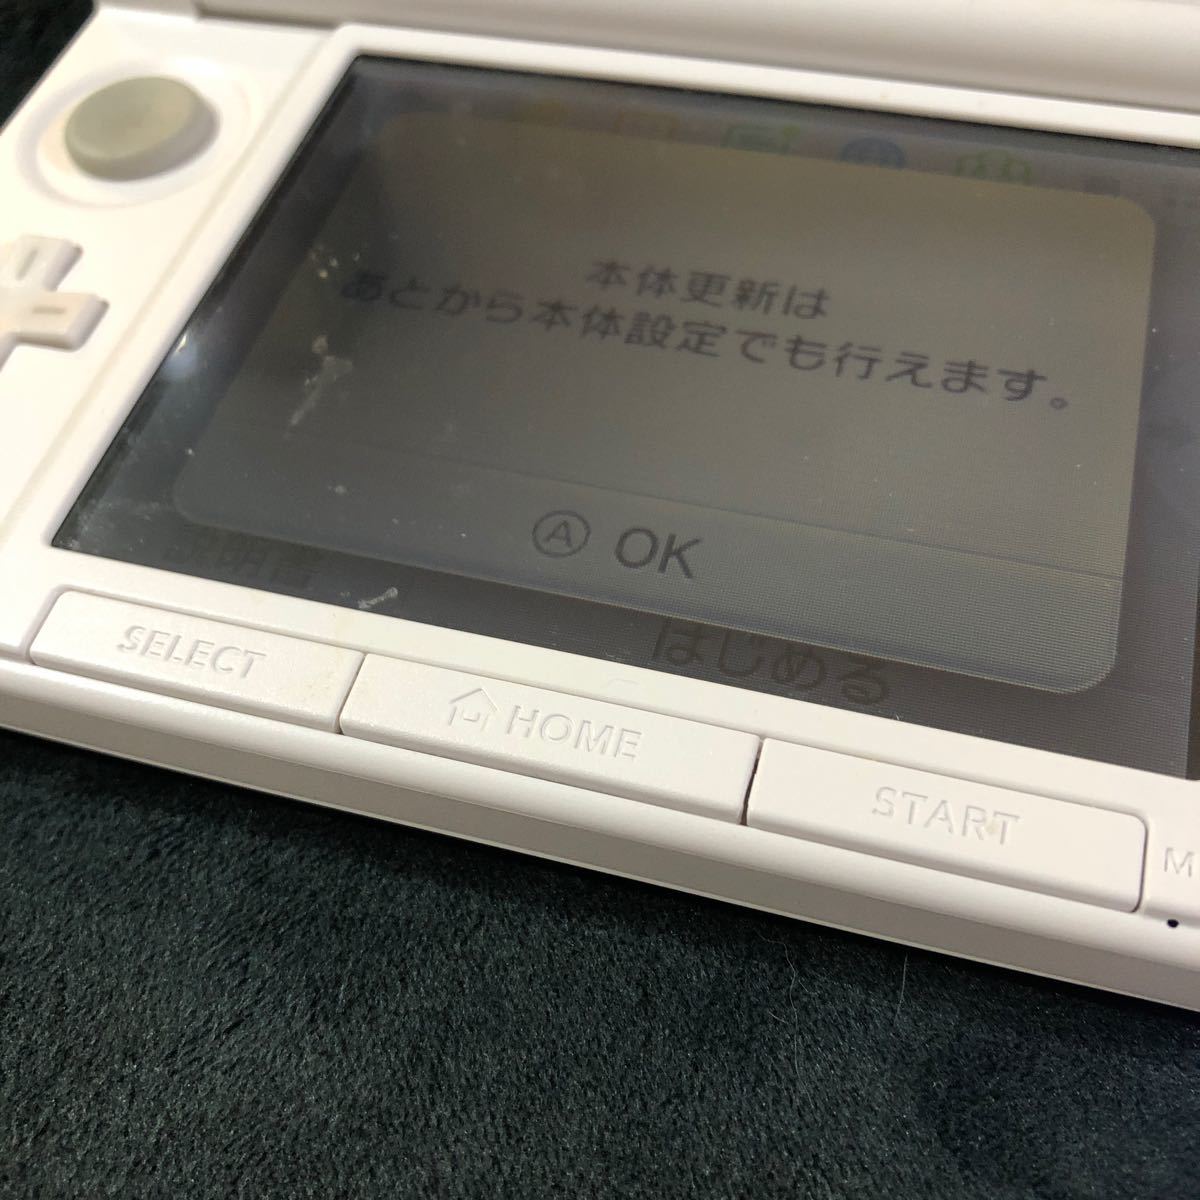 Nintendo 3DS LL